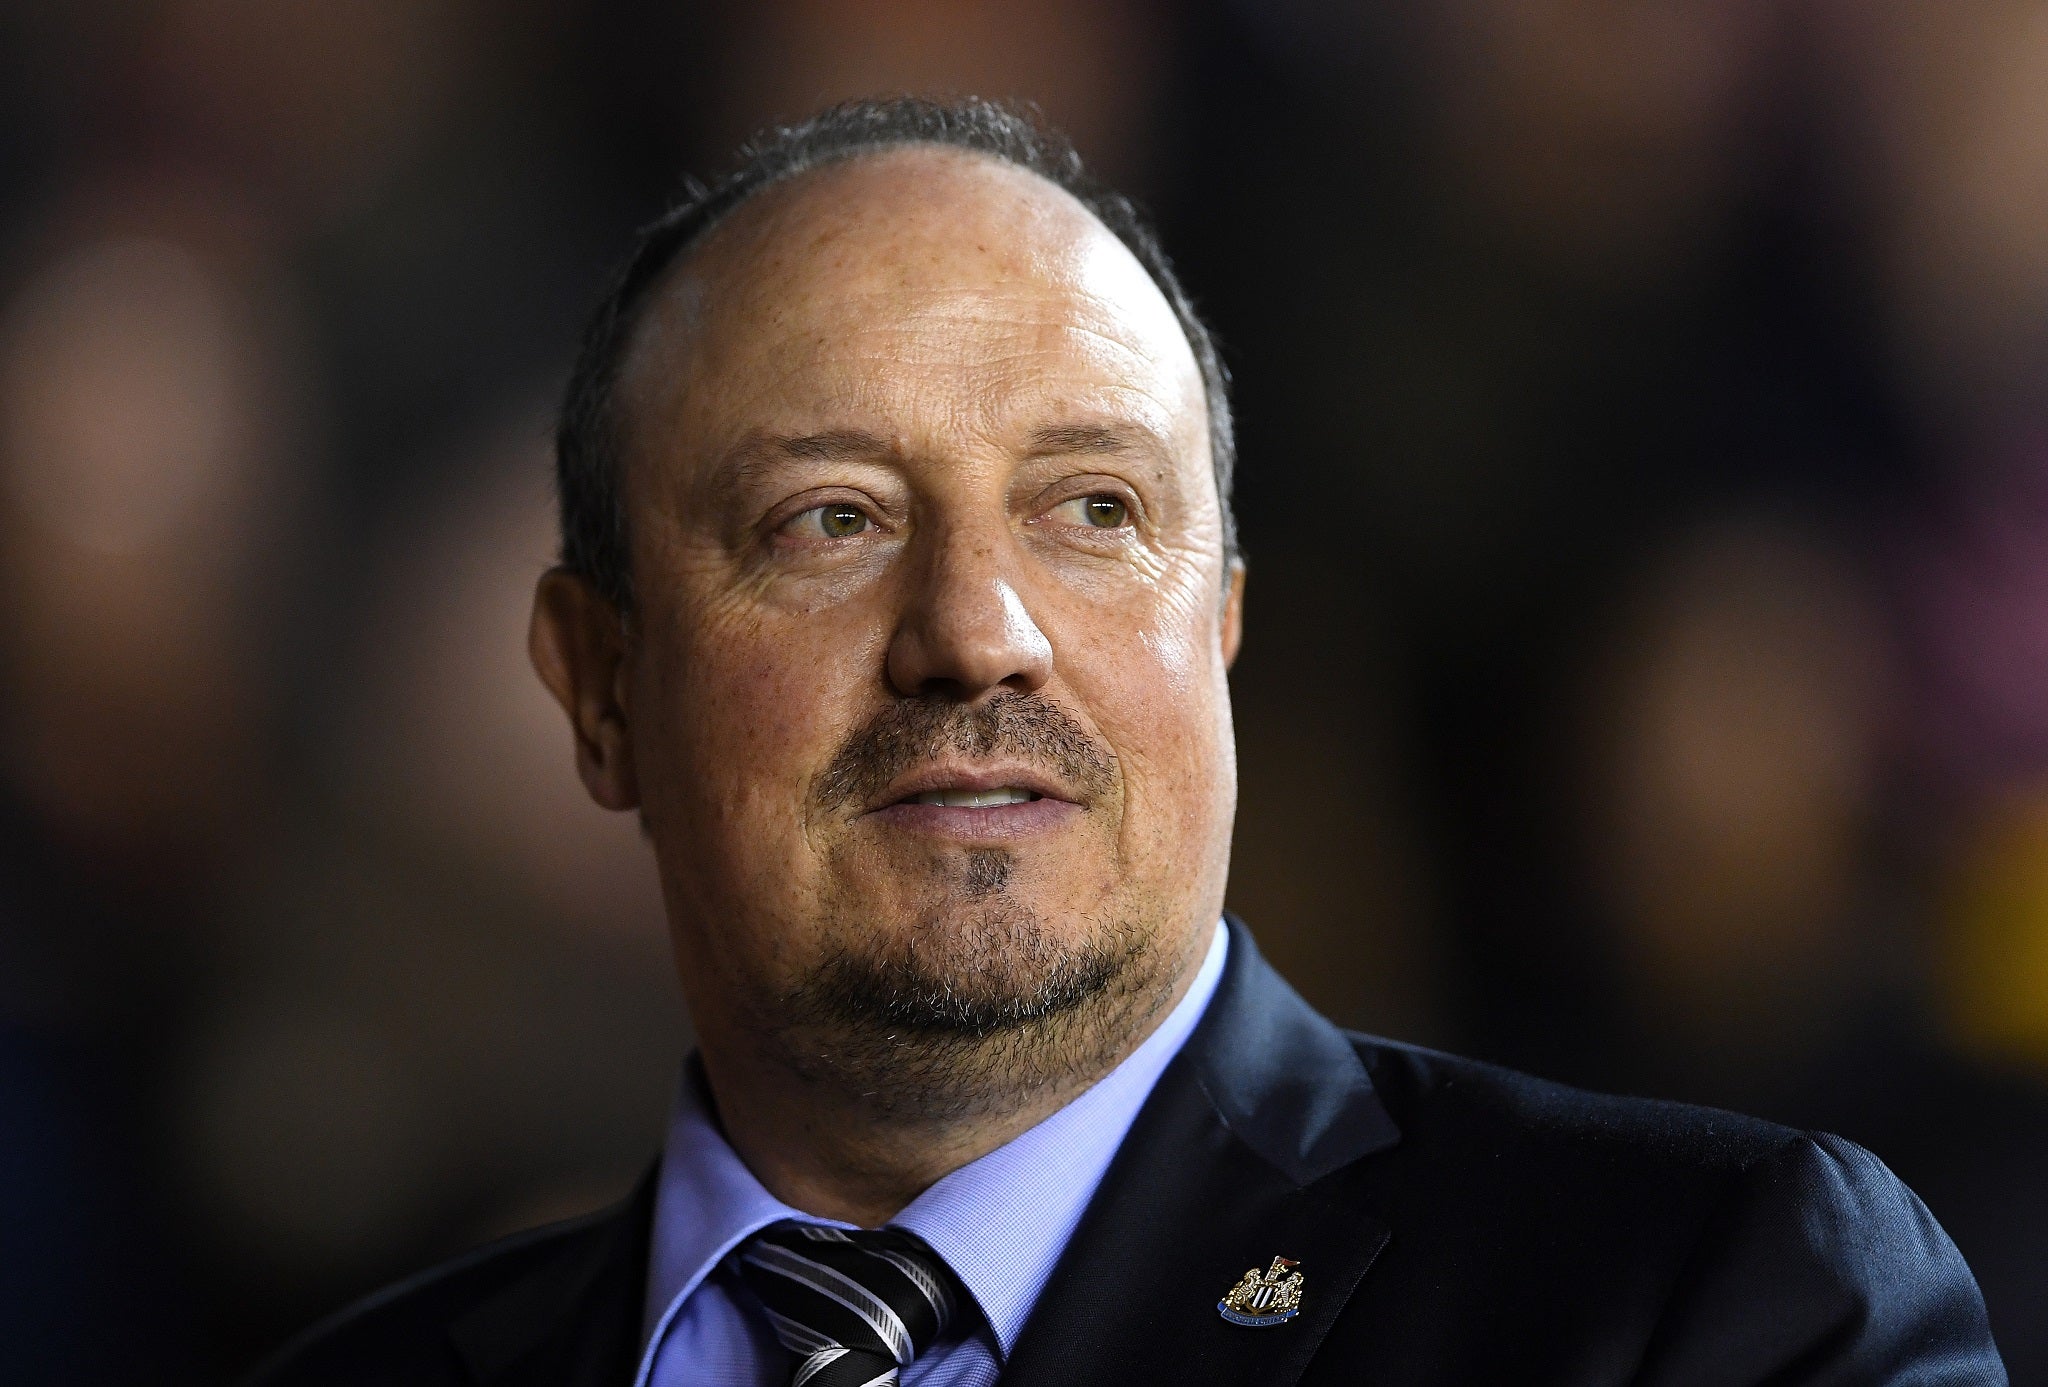 Rafa Benitez has Newcastle on course for an immediate Premier League return